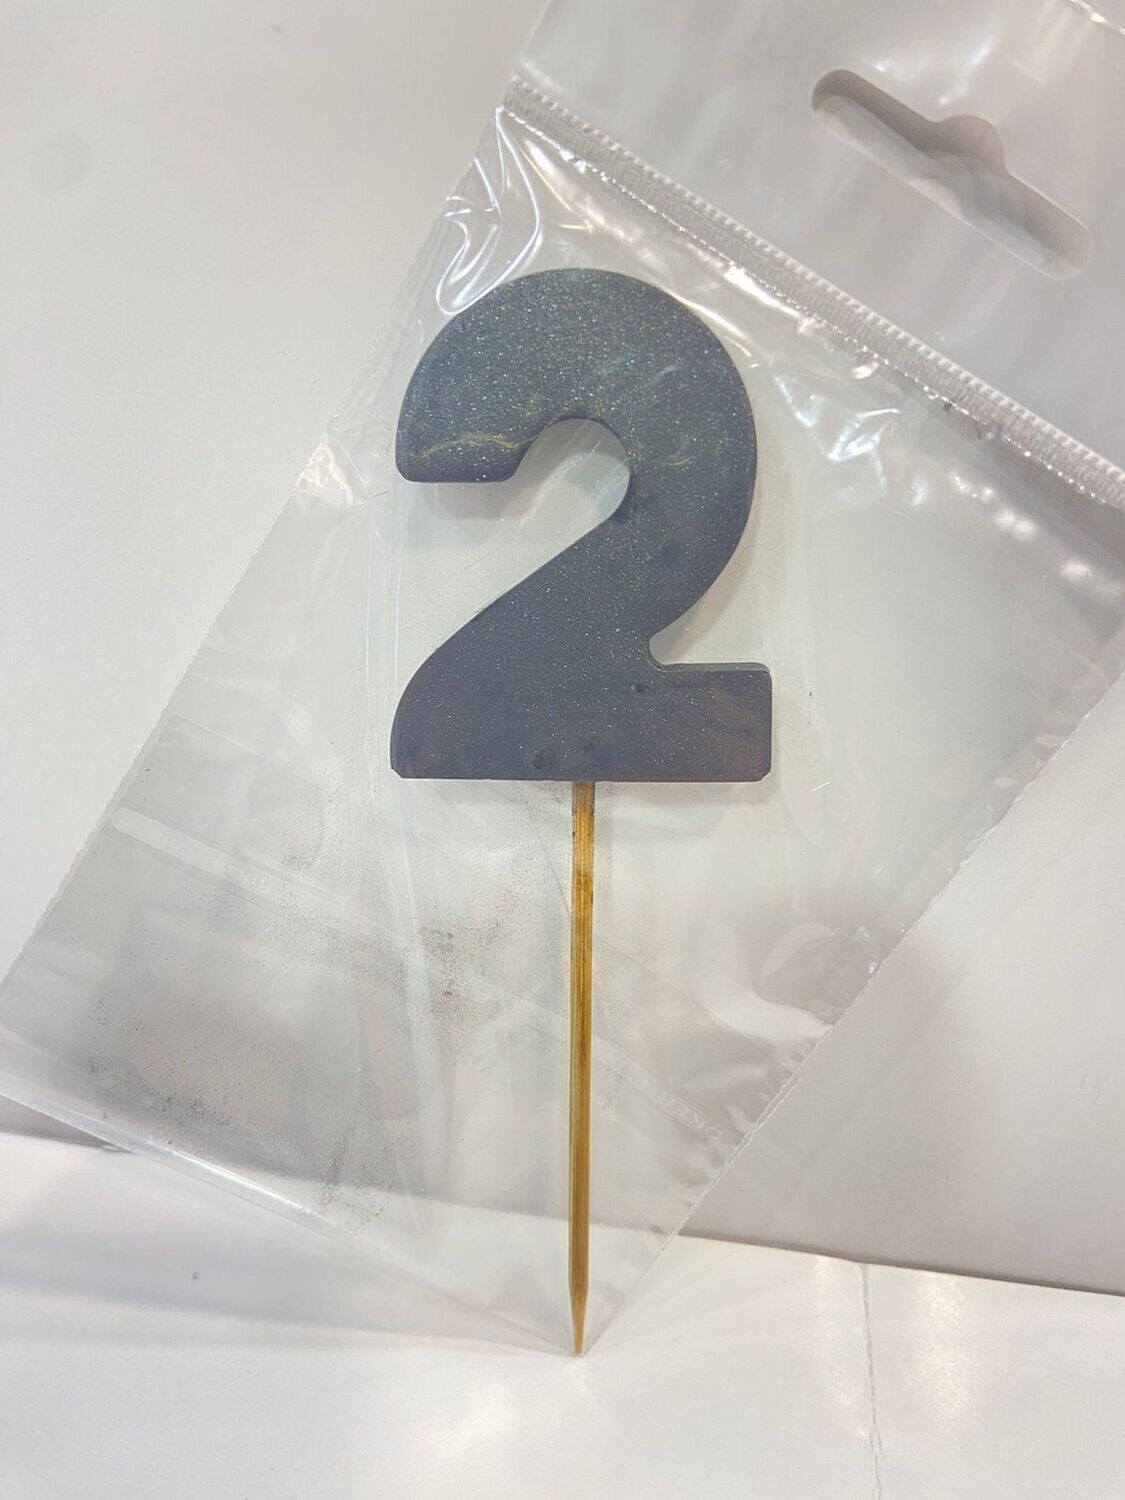 Чёрная Цифра "2" из шоколадной глазури на шпажке, высота цифры 5 см